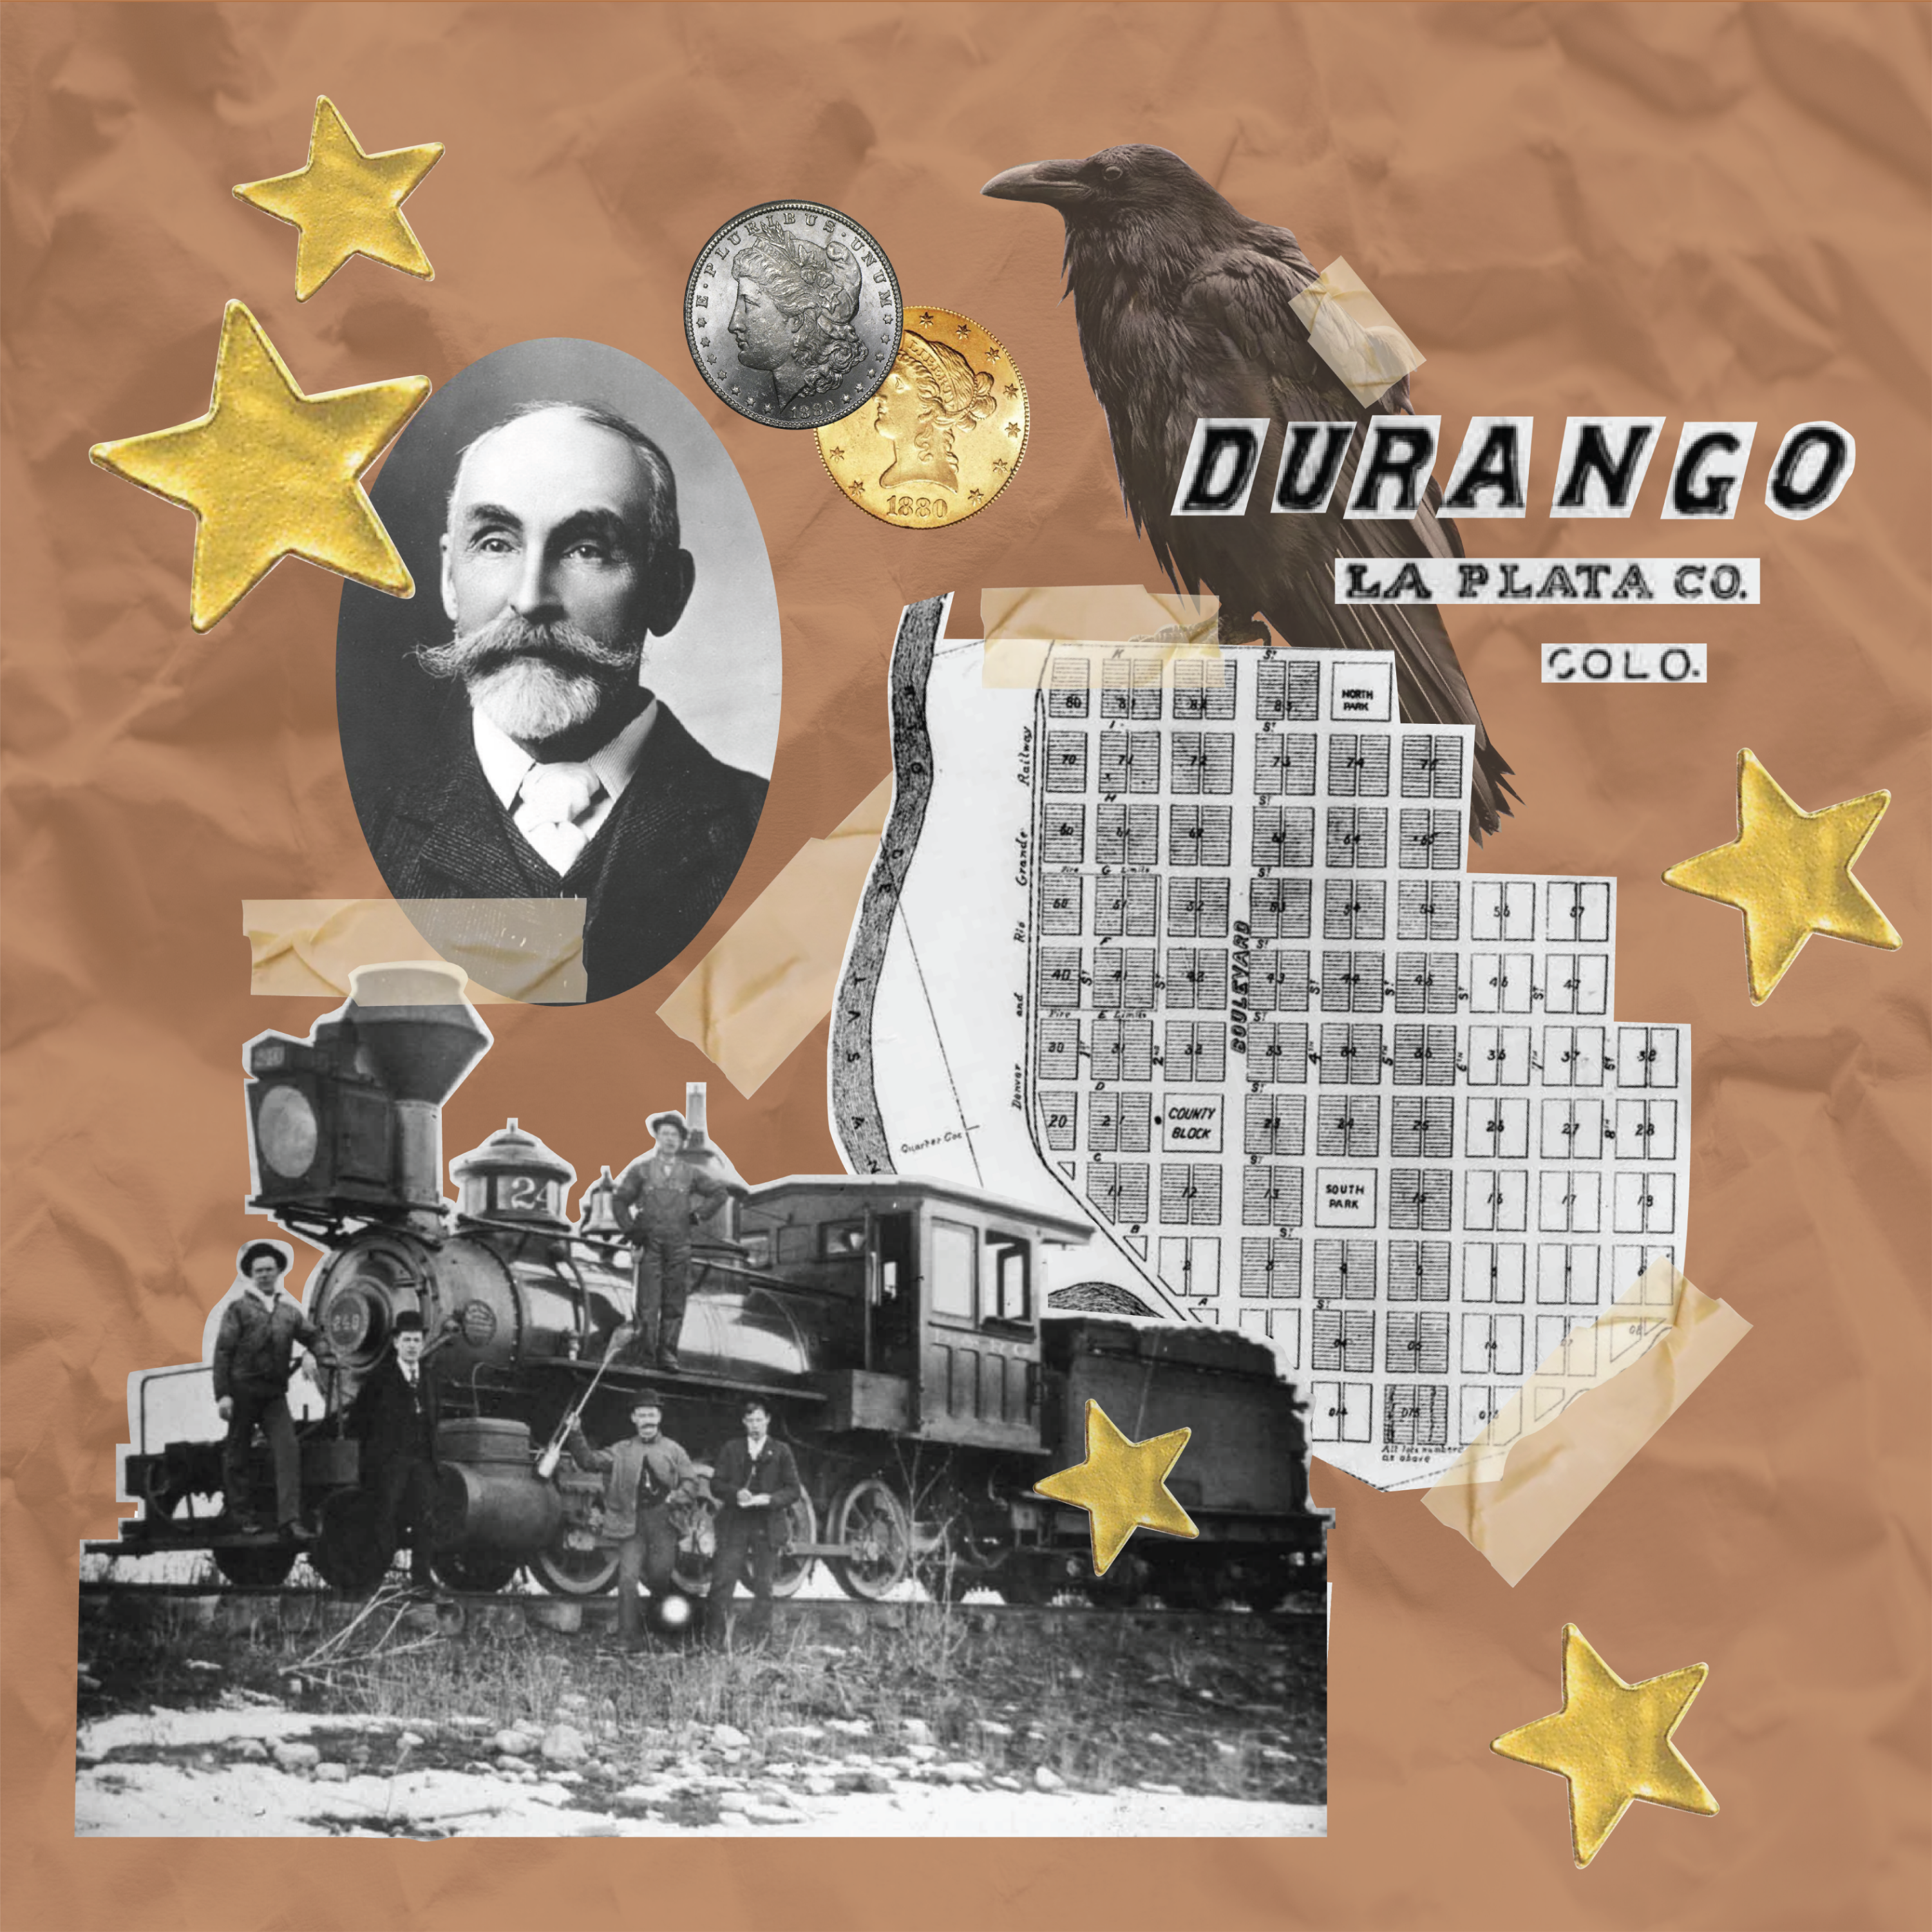 Durango's Mysterious Origin Story